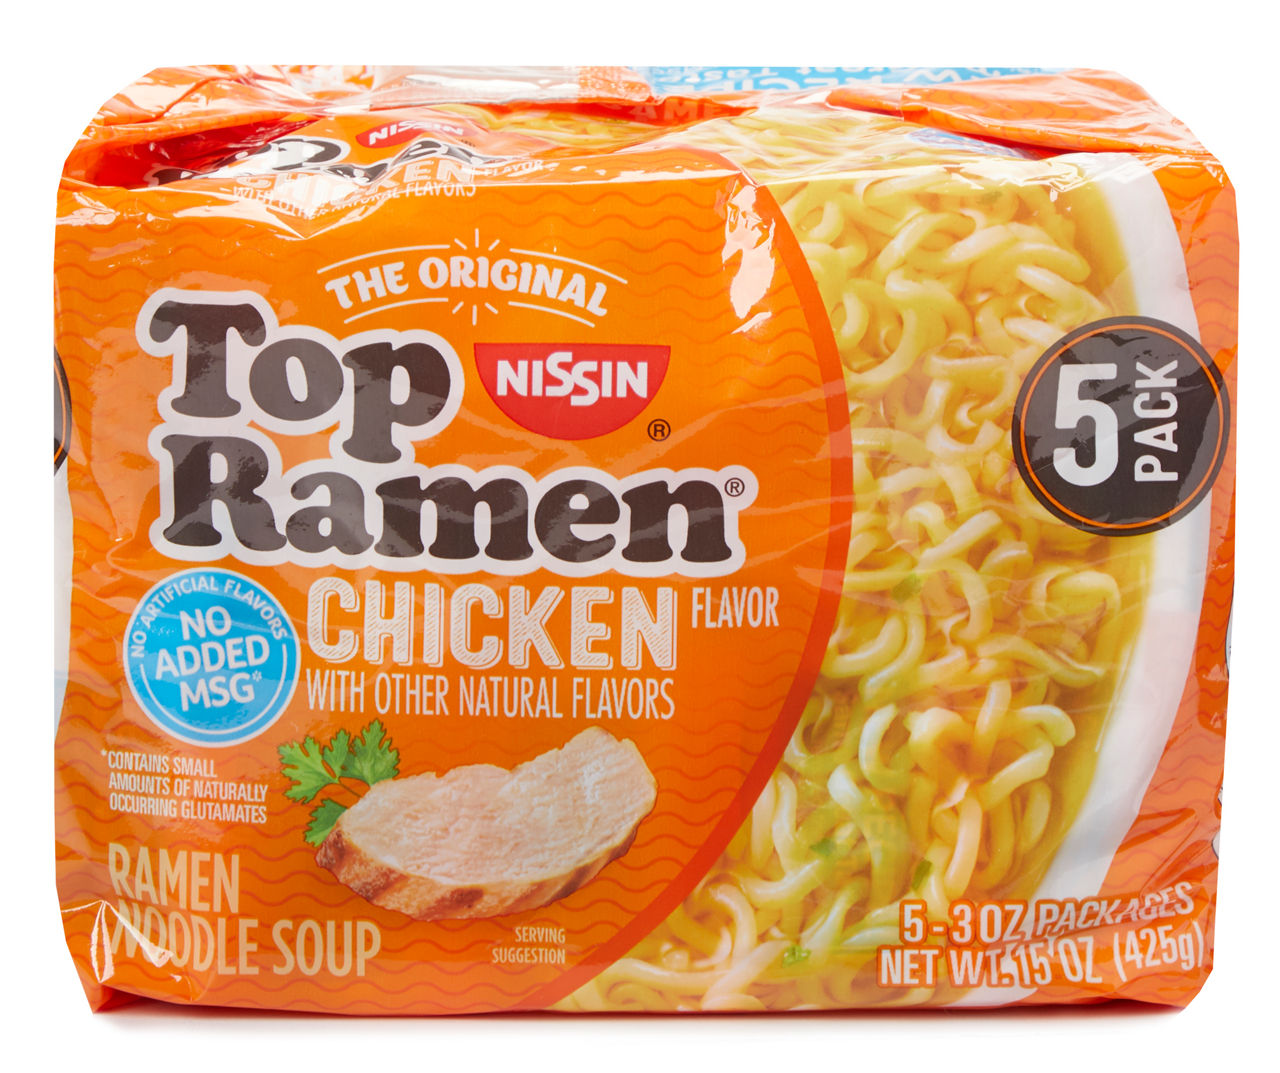 Original Top Ramen - Do you flavor your Nissin Top Ramen noodles